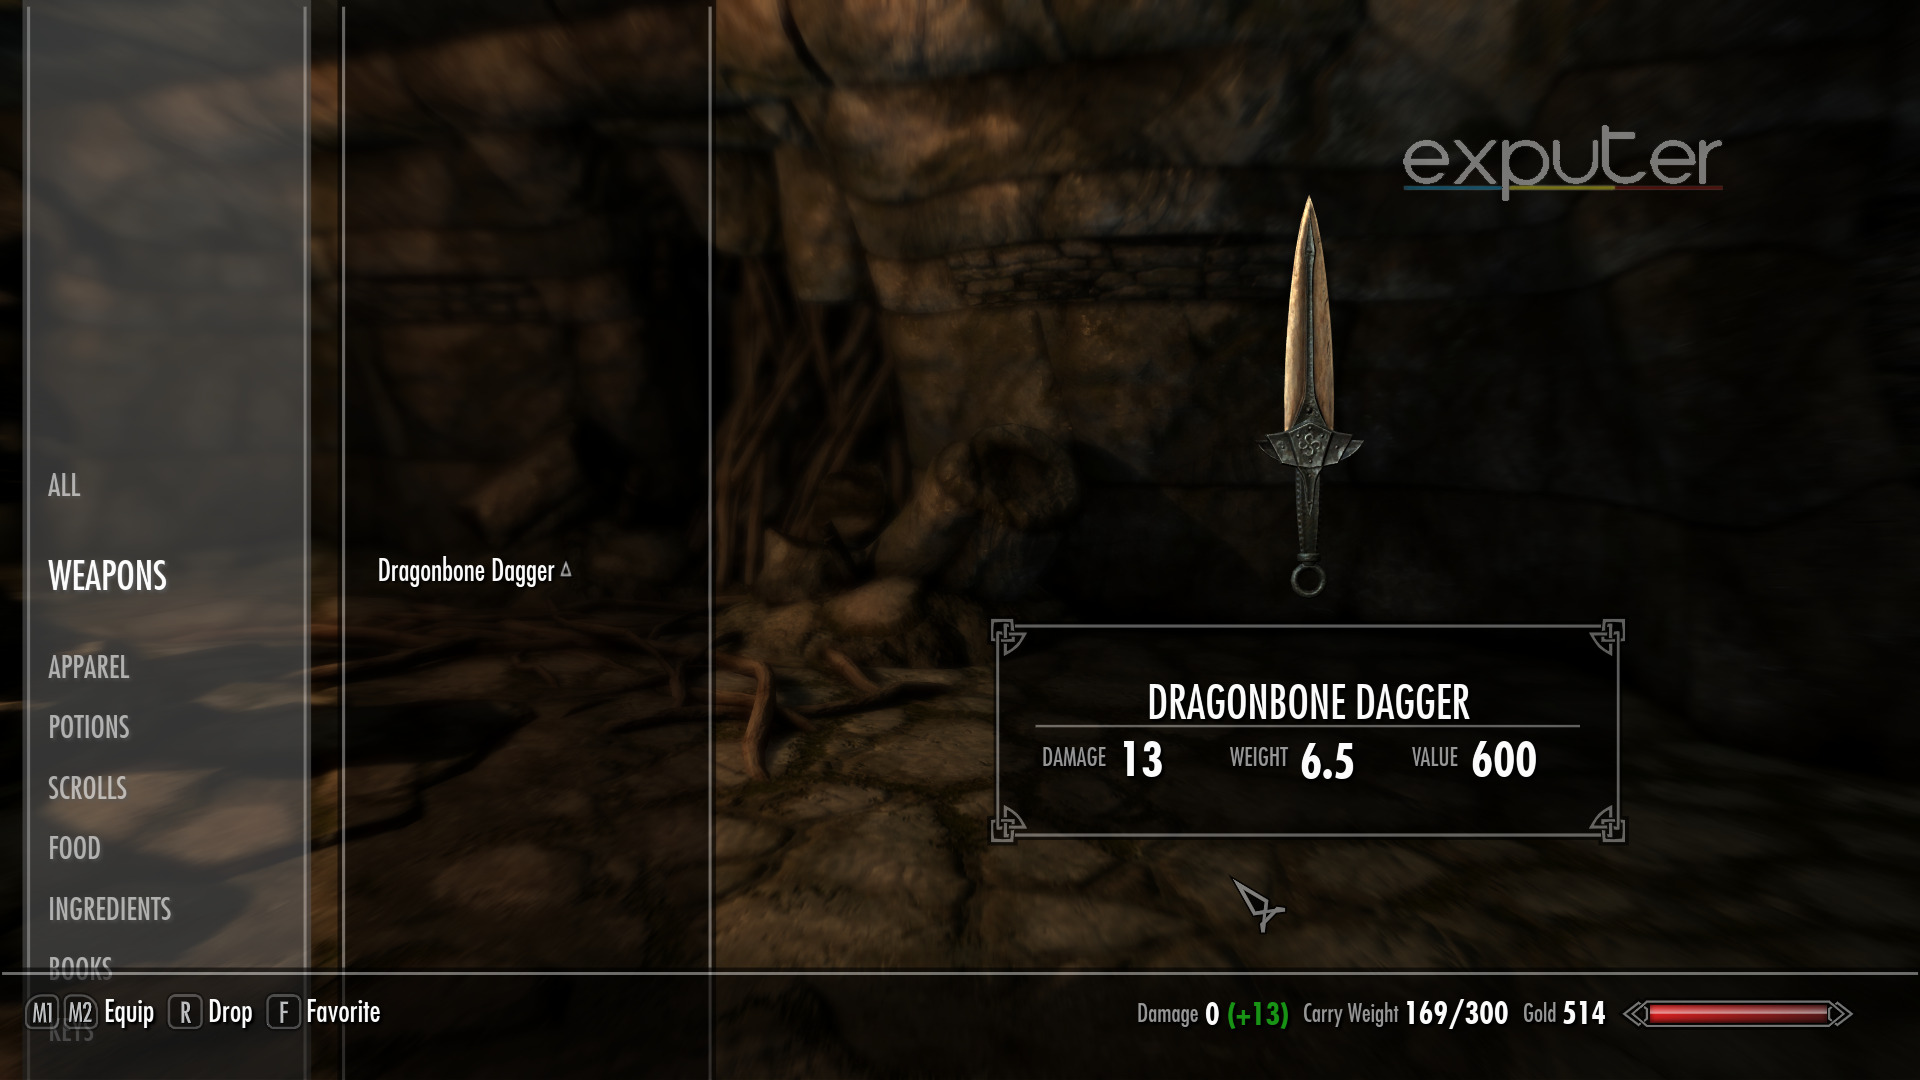 The Dragonbone Dagger.